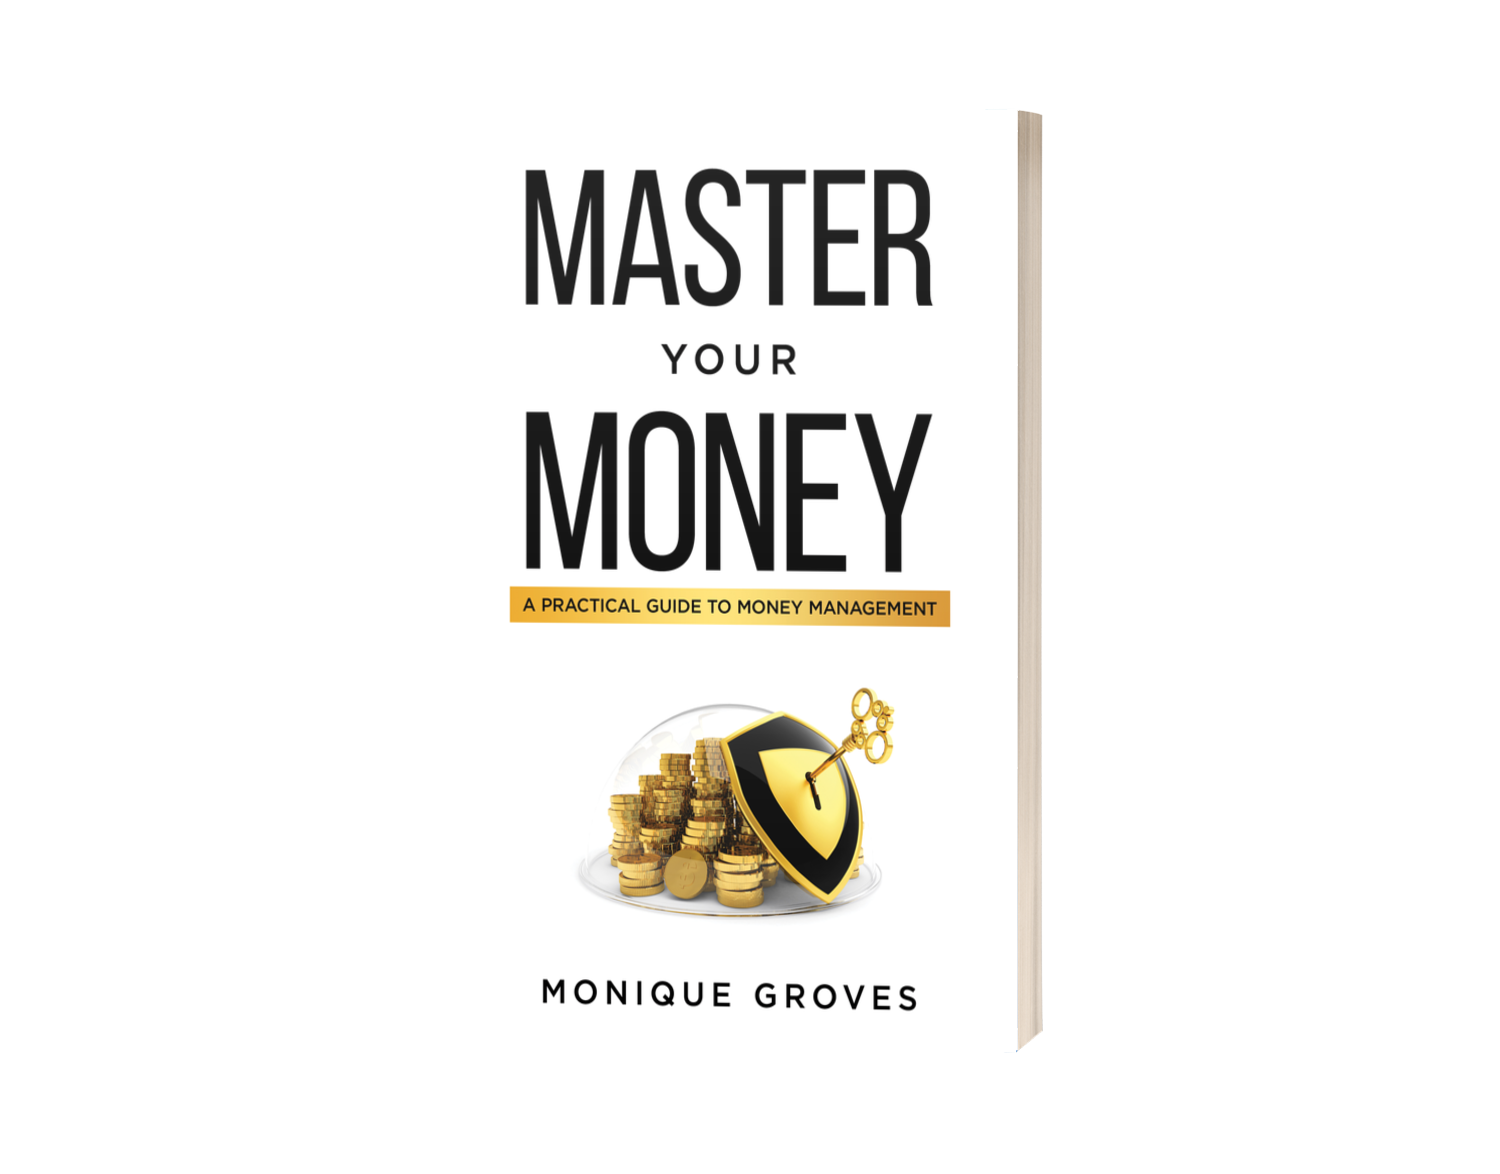 Master Your Money